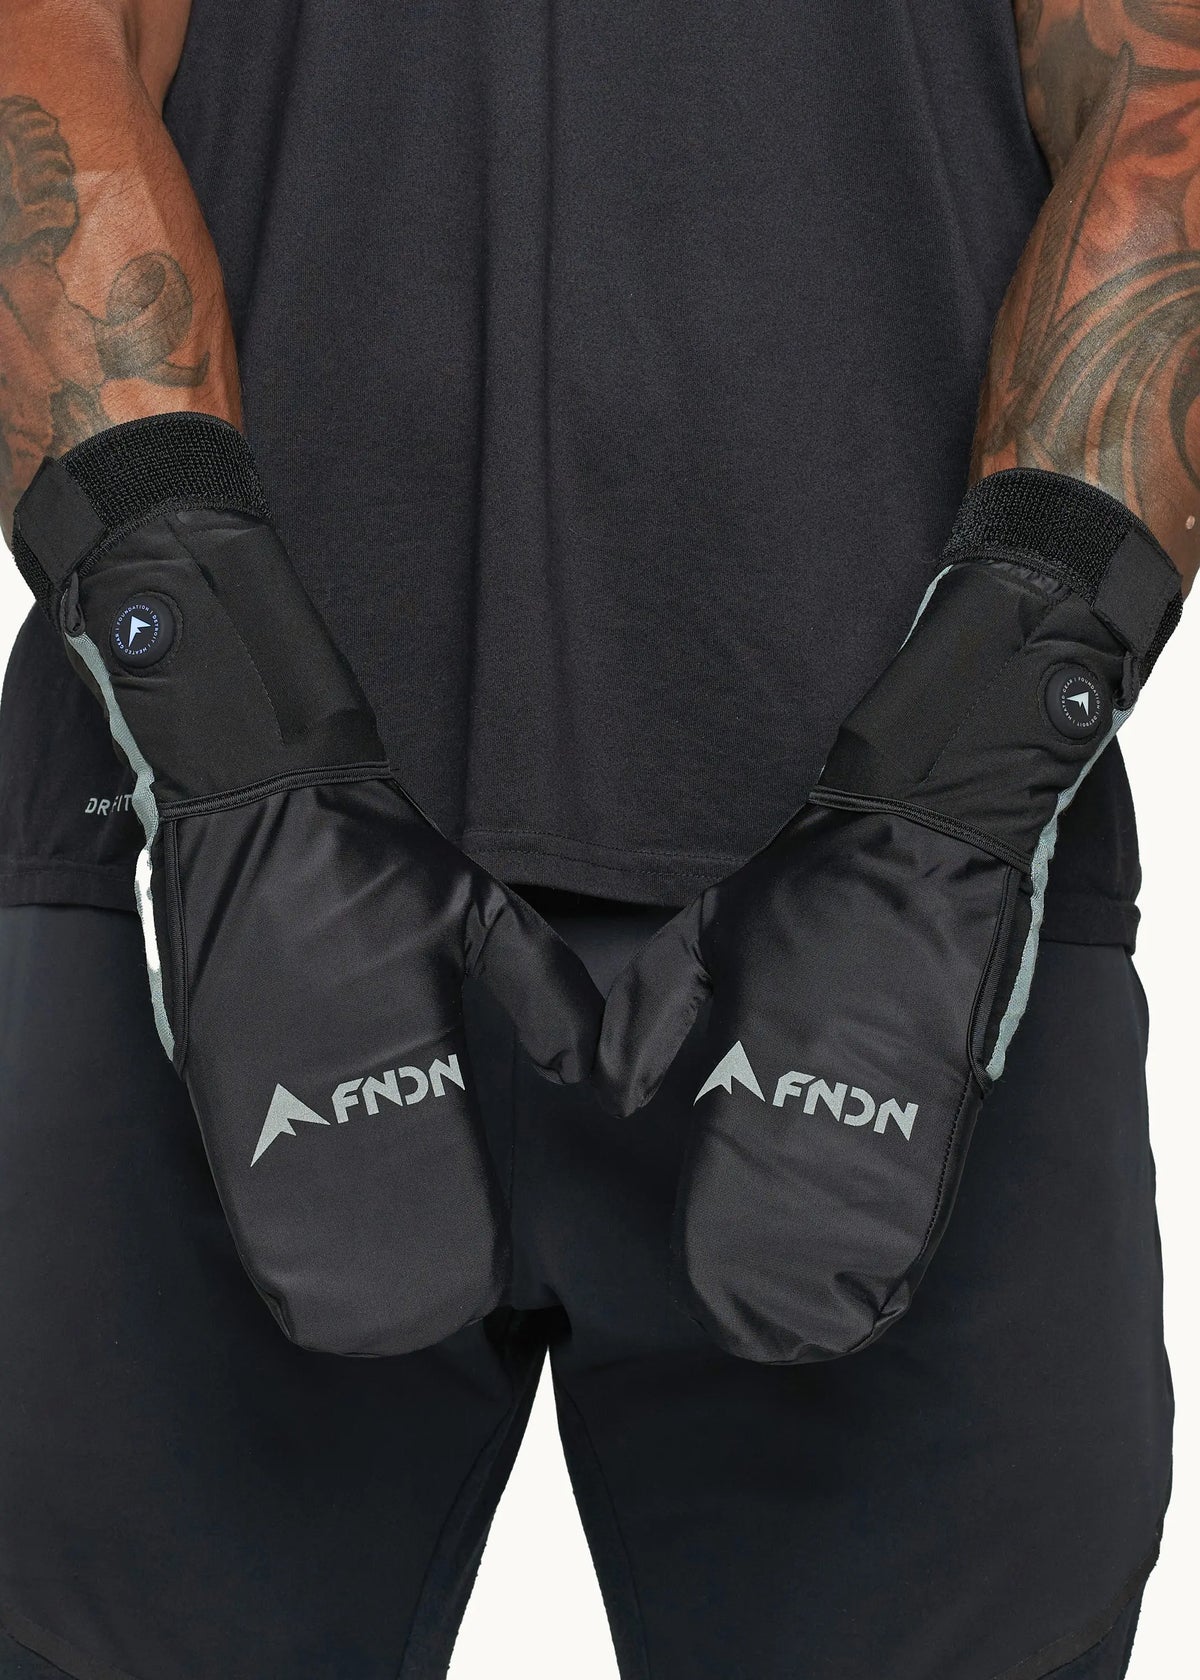 FNDN 3.7V Heated Liner Glove with Mitt FNDN